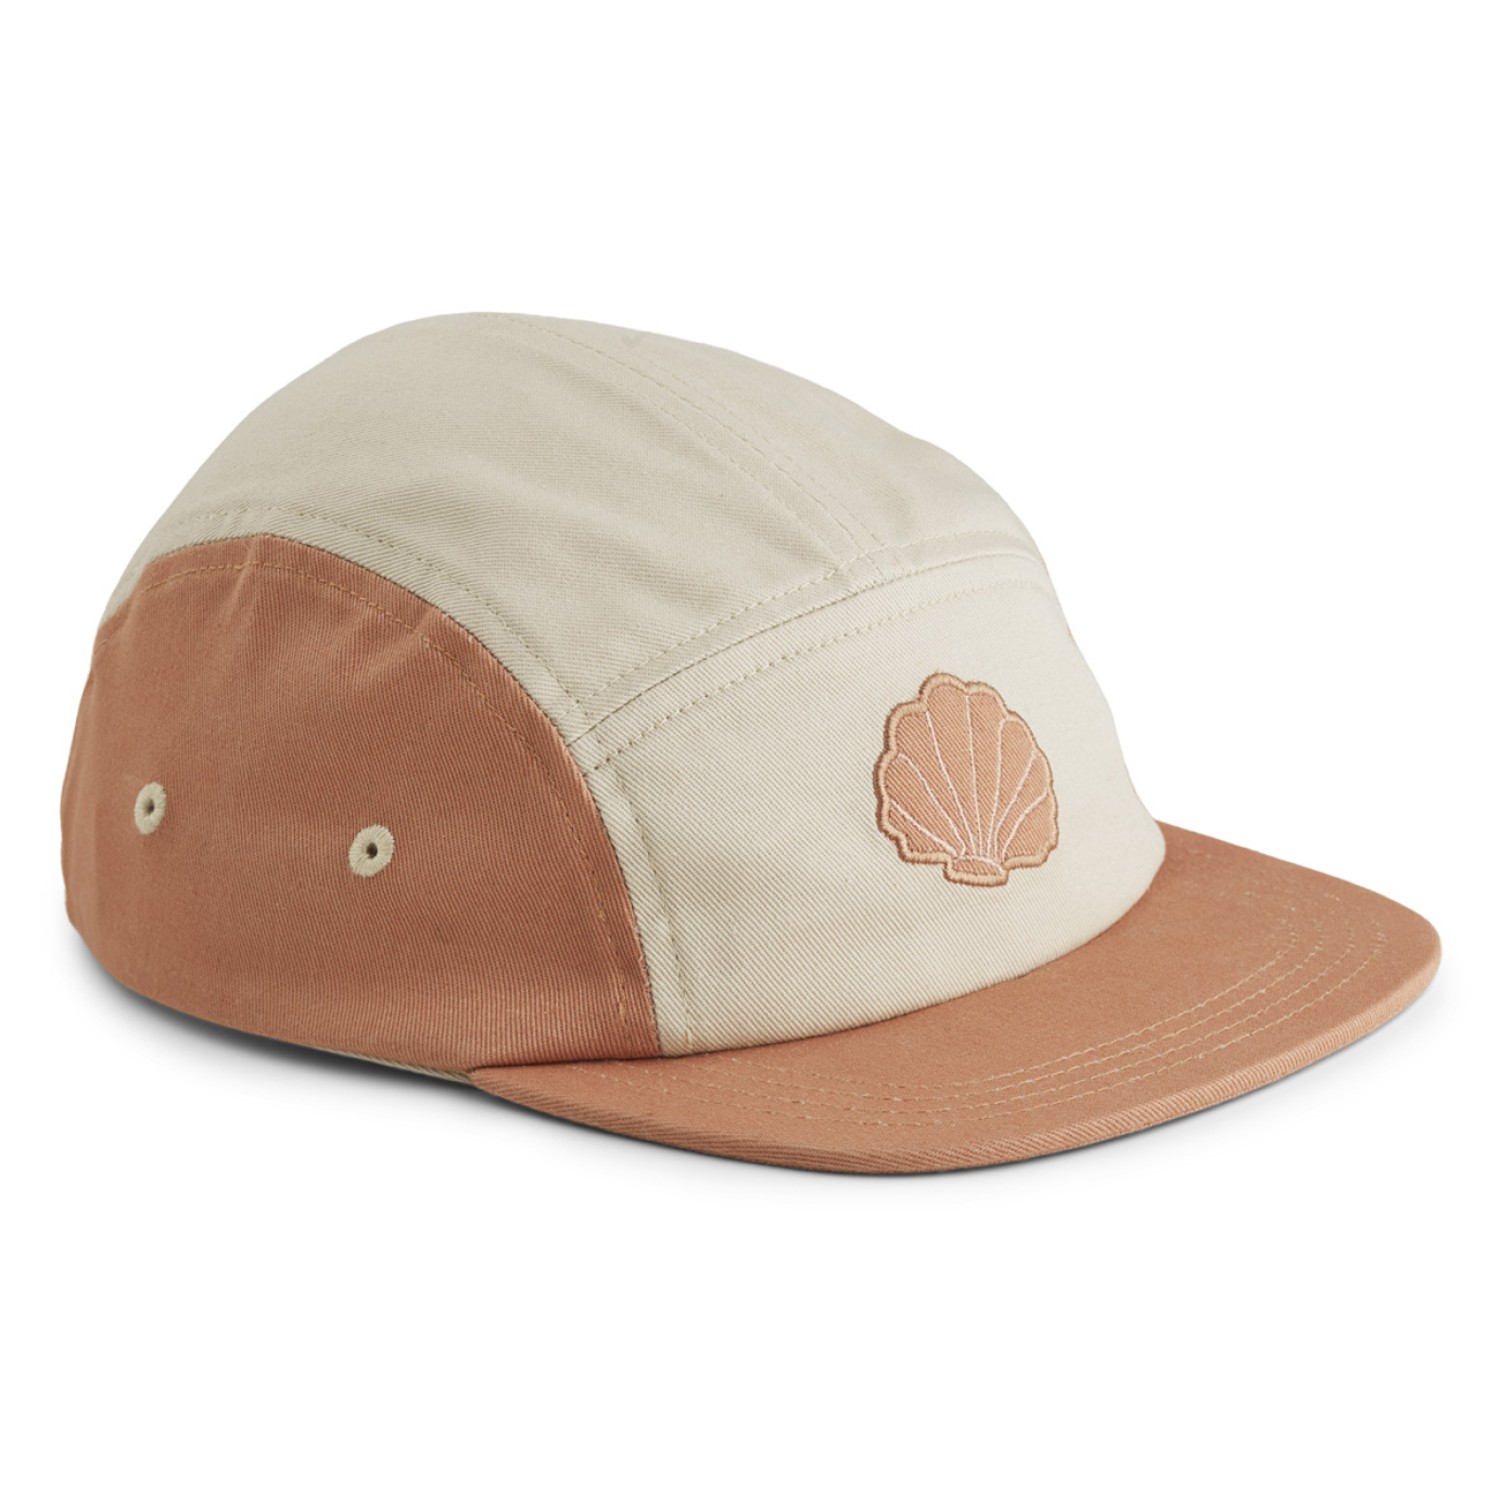 Pălărie cu protecție Rory  | Sea shell tuscany rose mix